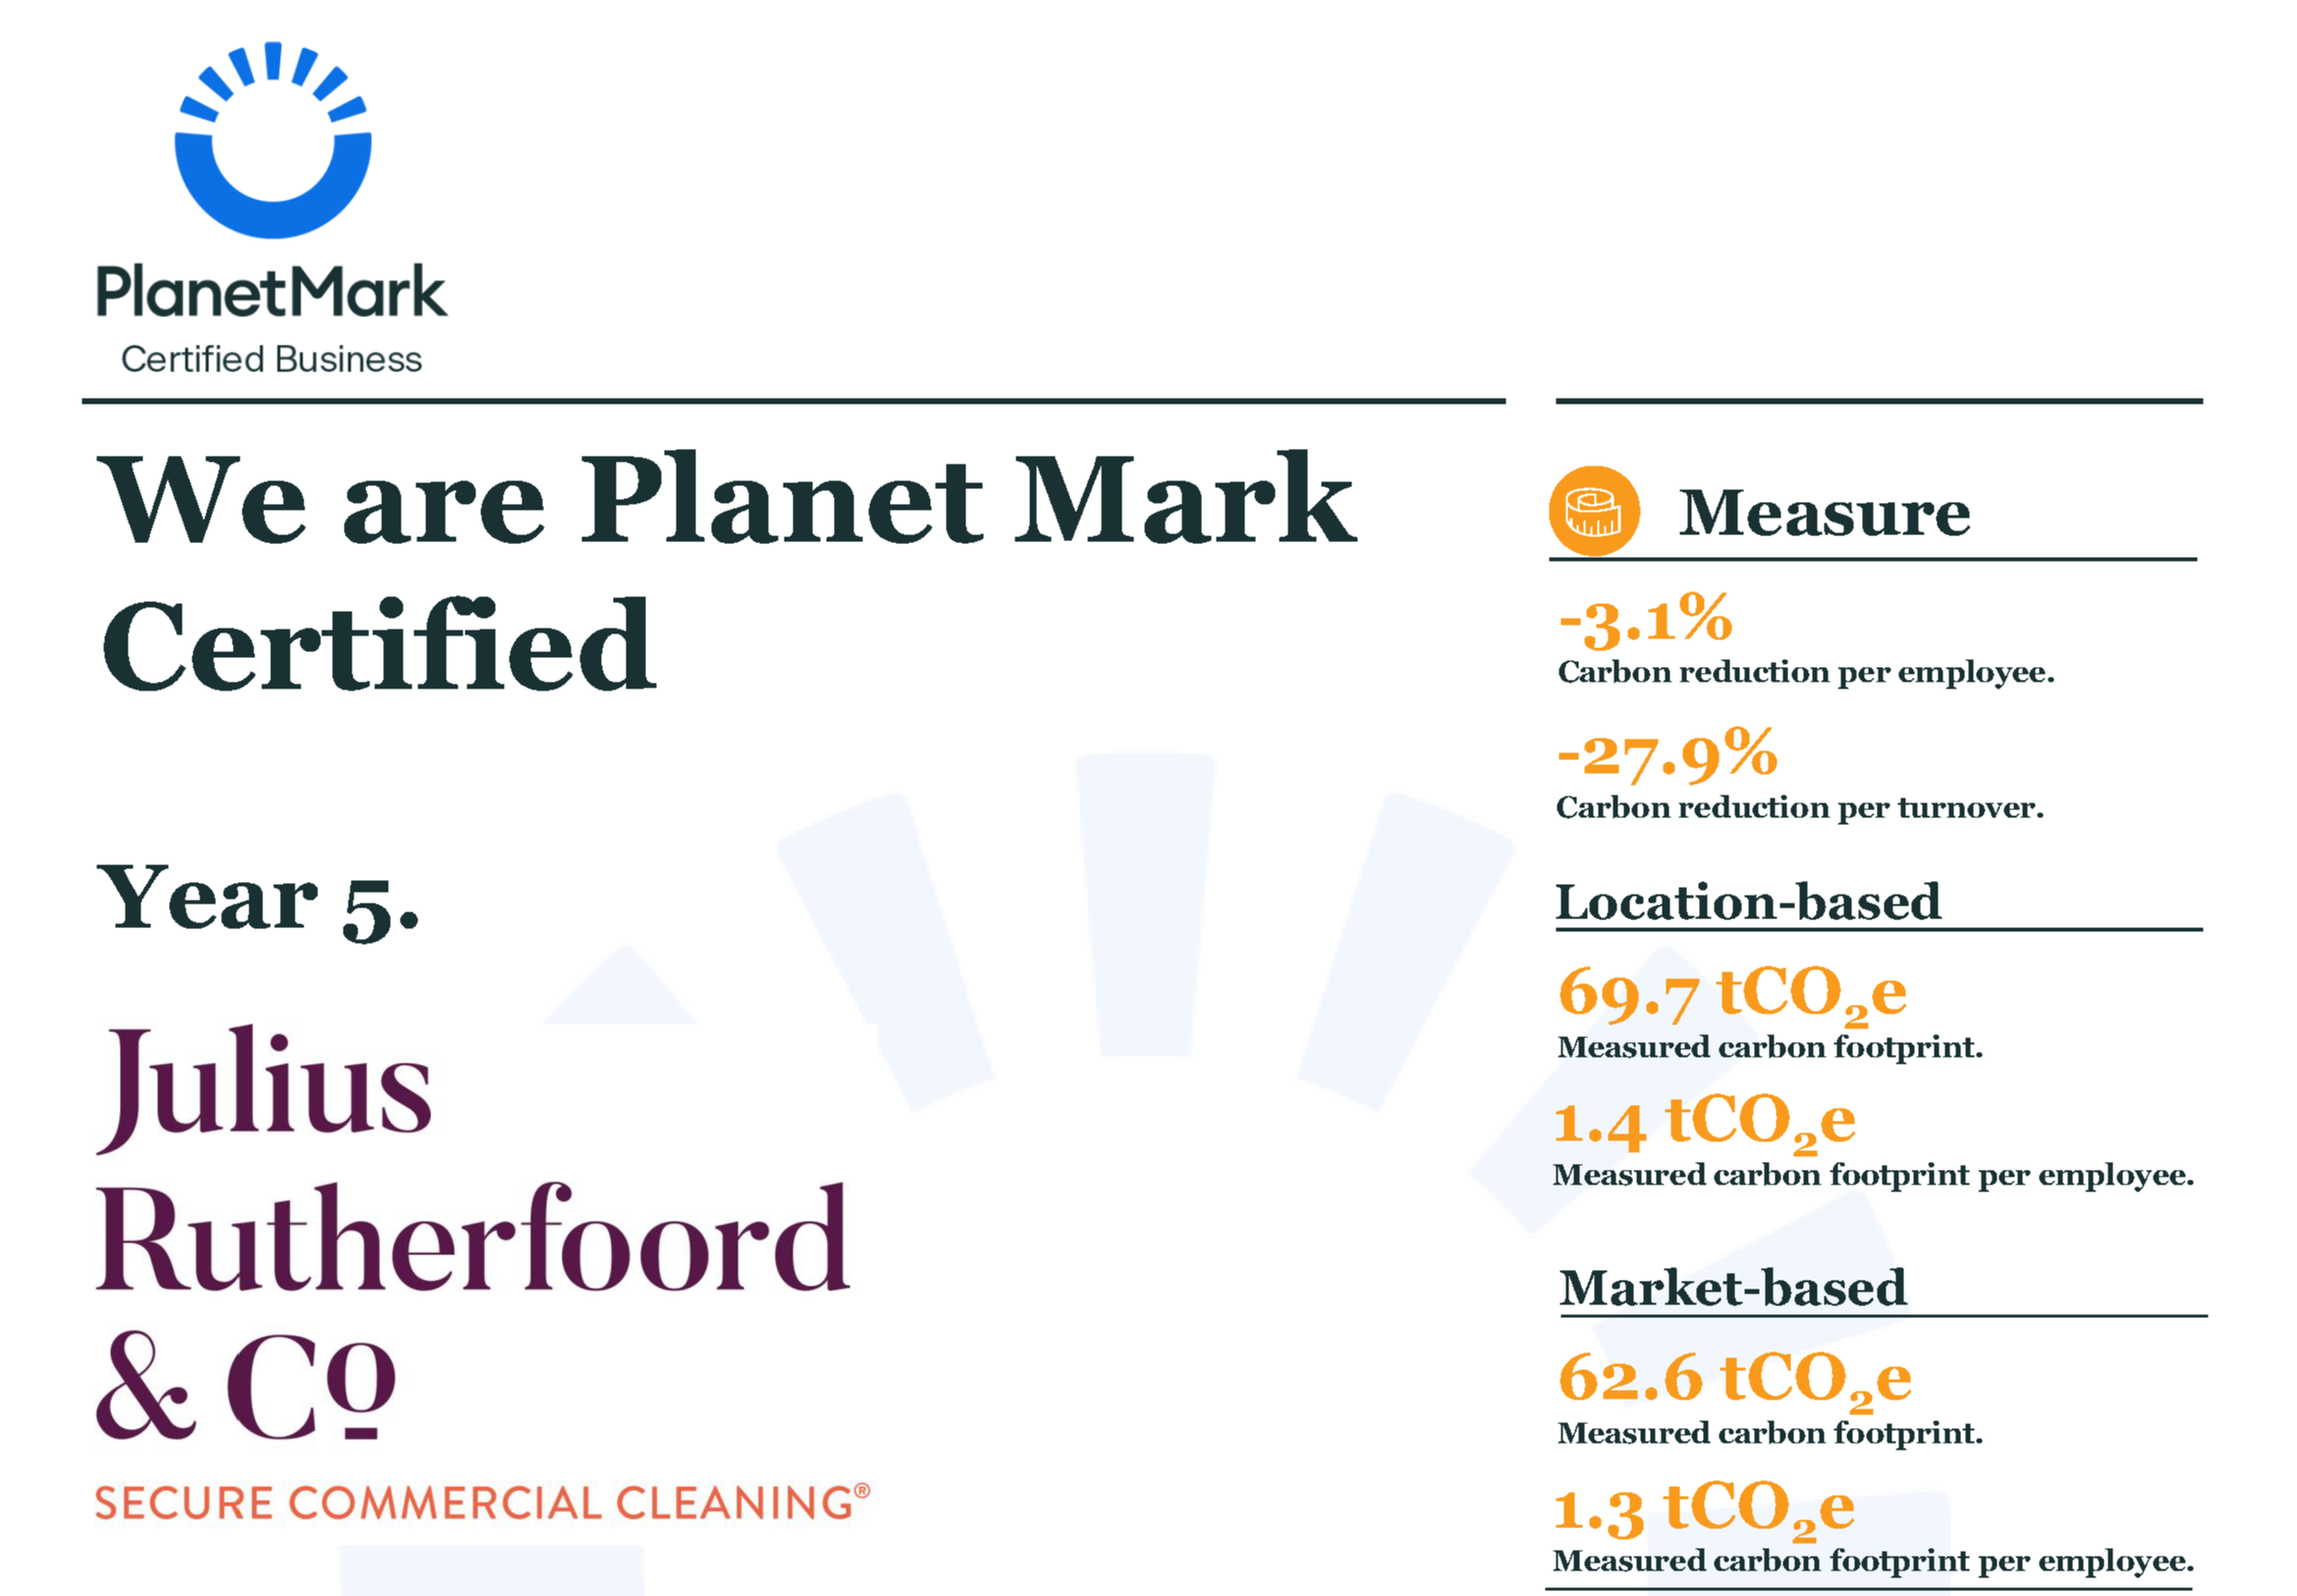 JR&Co's Planet Mark certificate